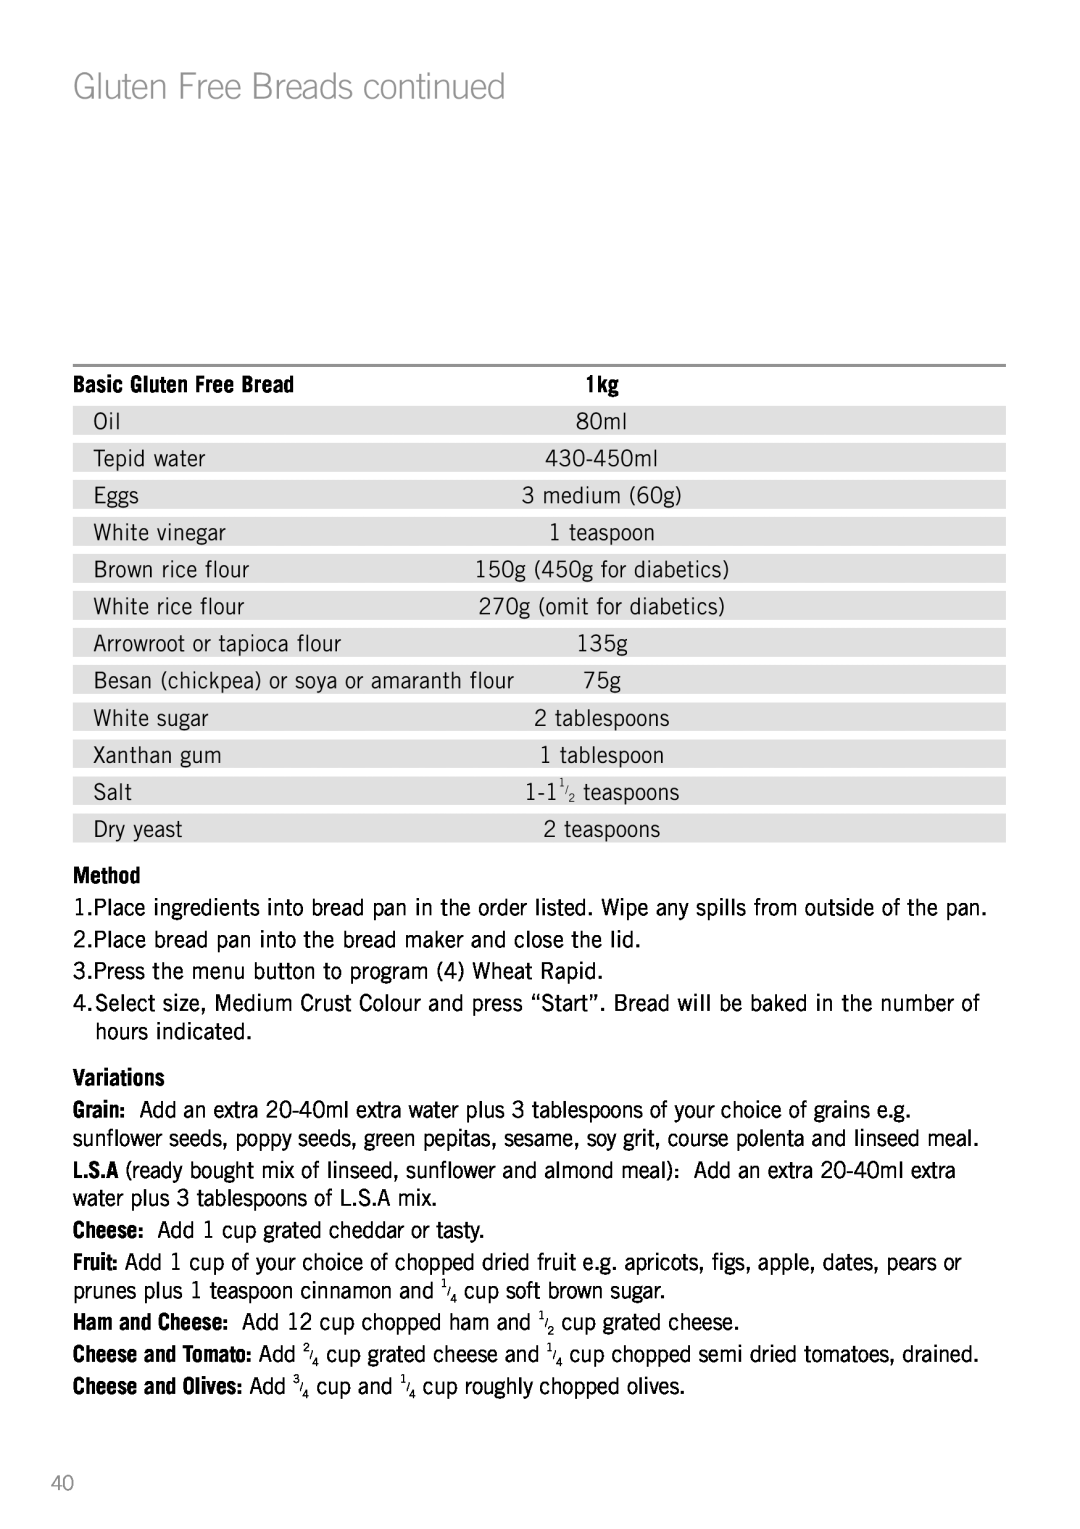 Sunbeam BM3500 manual Basic Gluten Free Bread, Variations, Gluten Free Breads continued, Method 